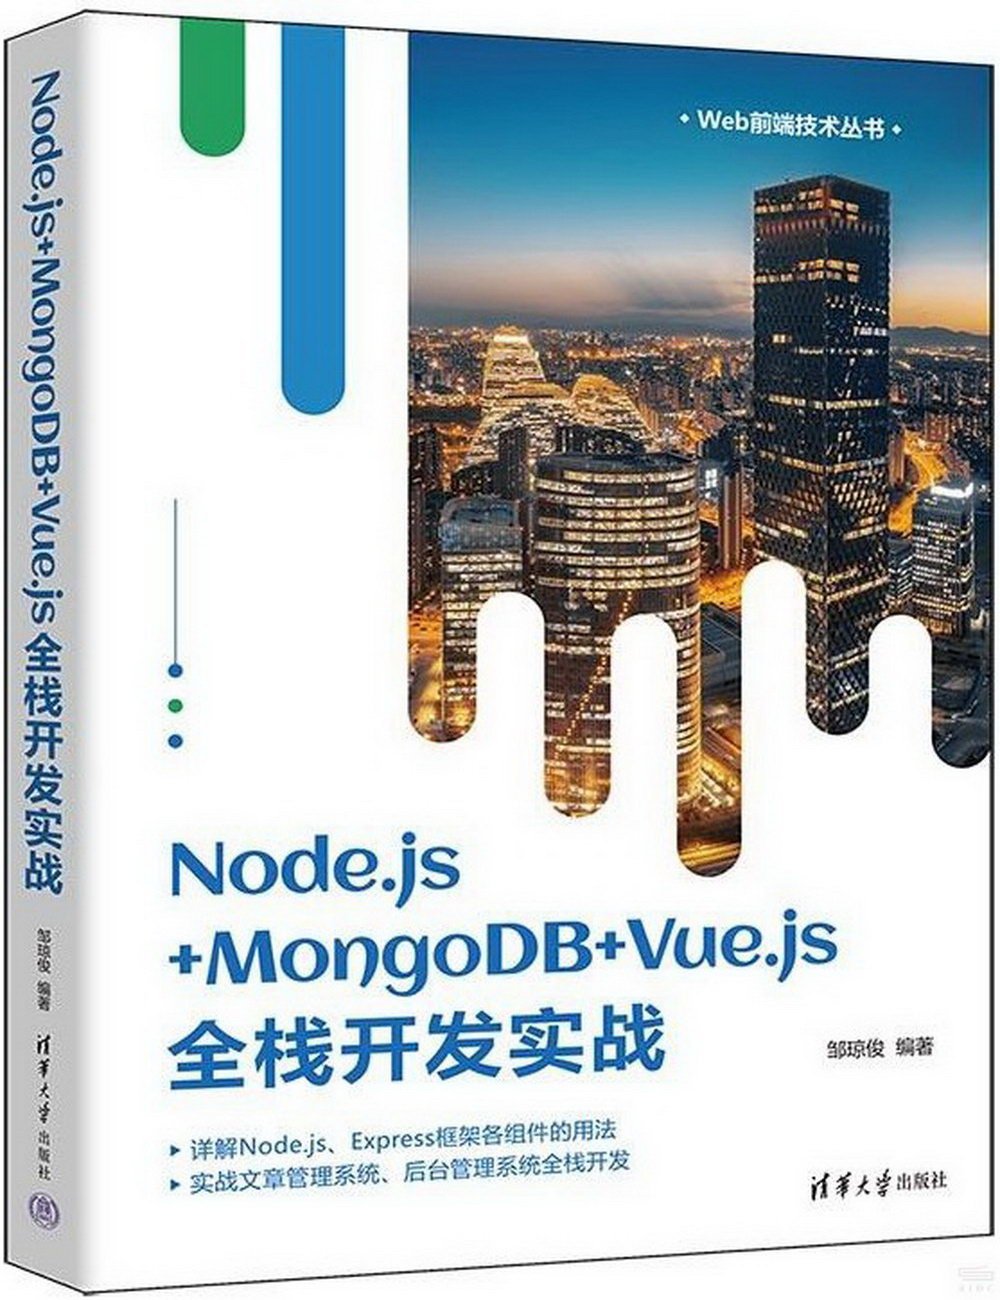 Node.js+MongoDB+Vue.js全棧開發實戰